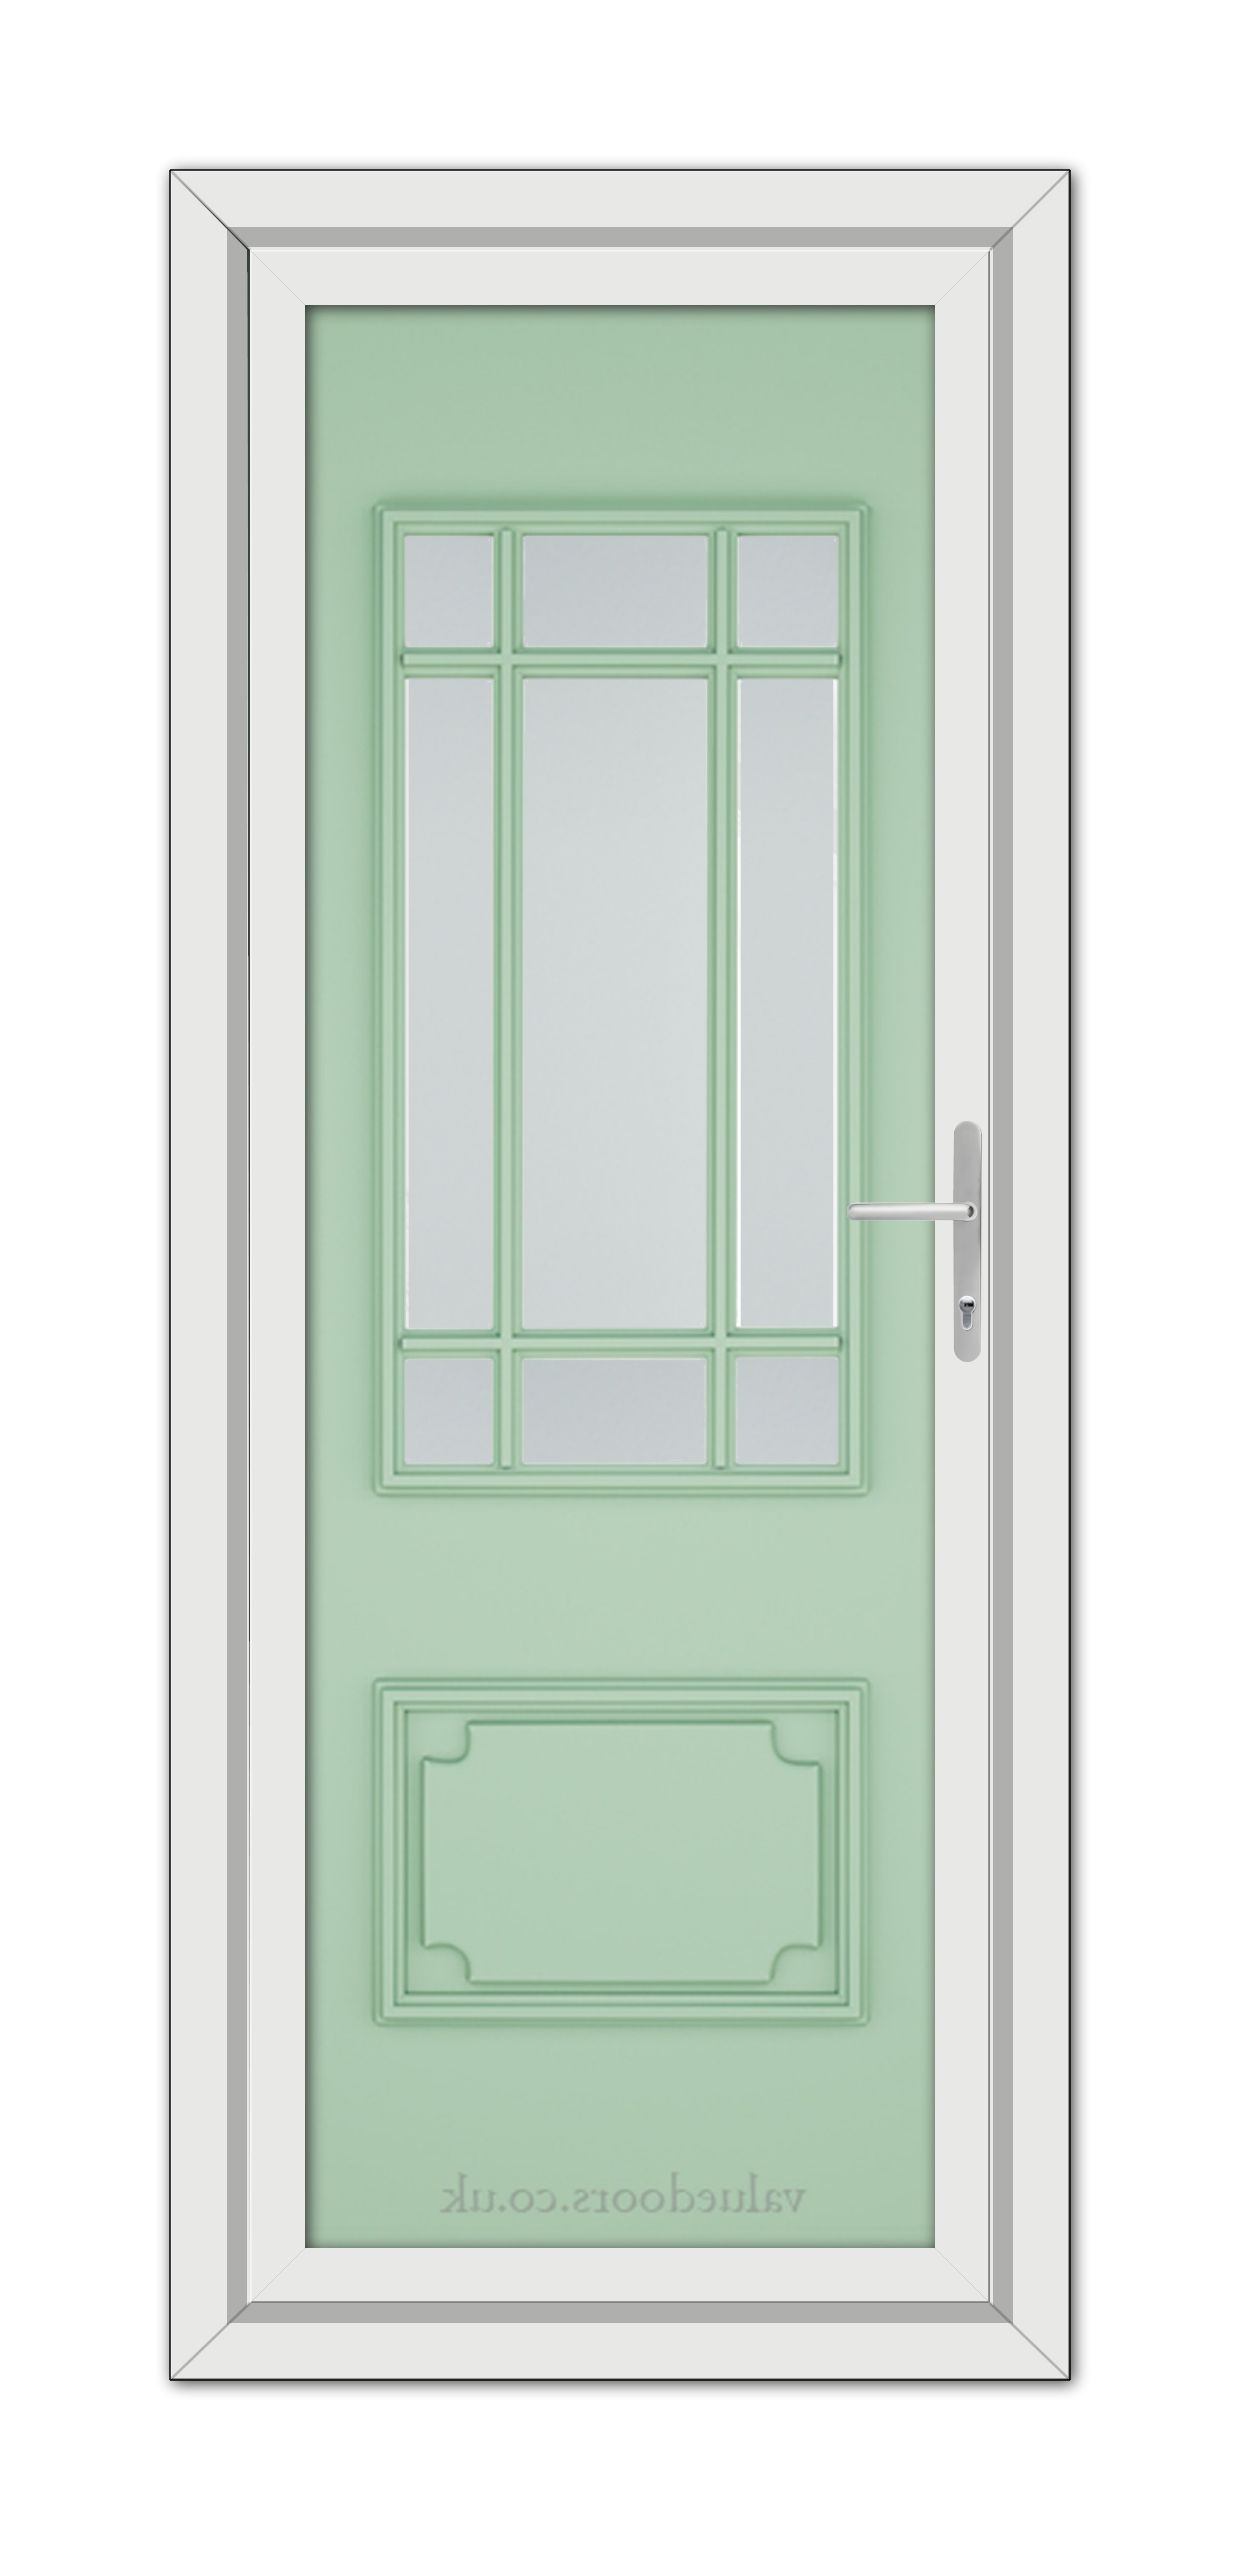 A close-up of a Chartwell Green Seville uPVC Door.